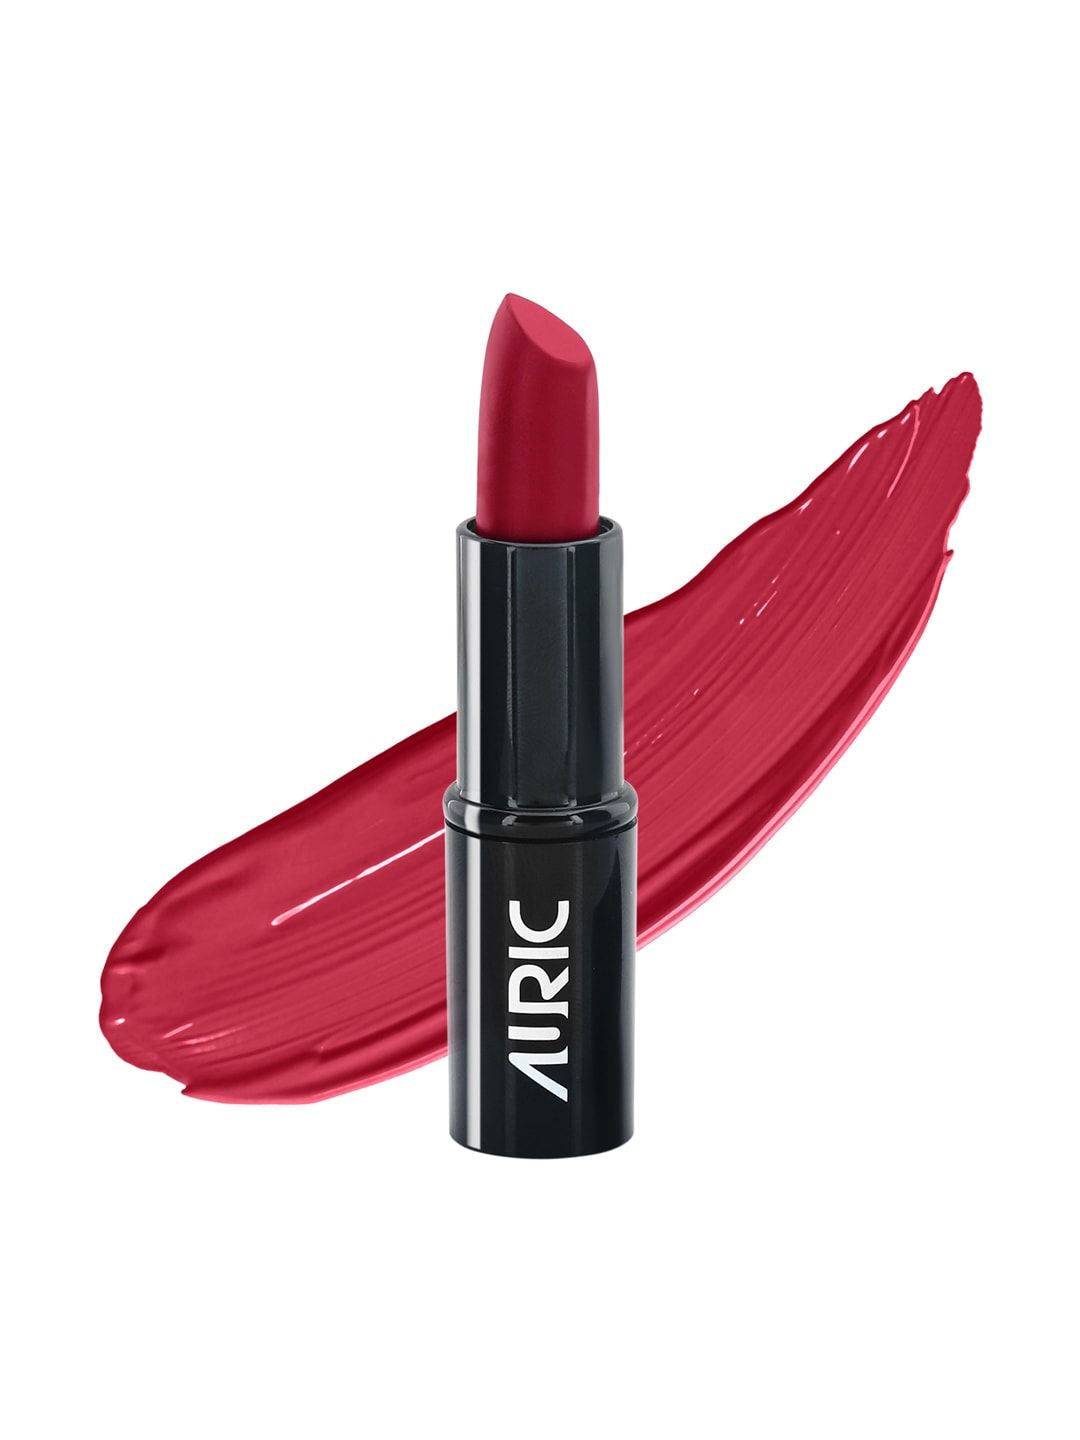 AURIC MoistureLock Lipstick Merlot 3106 4 g Price in India